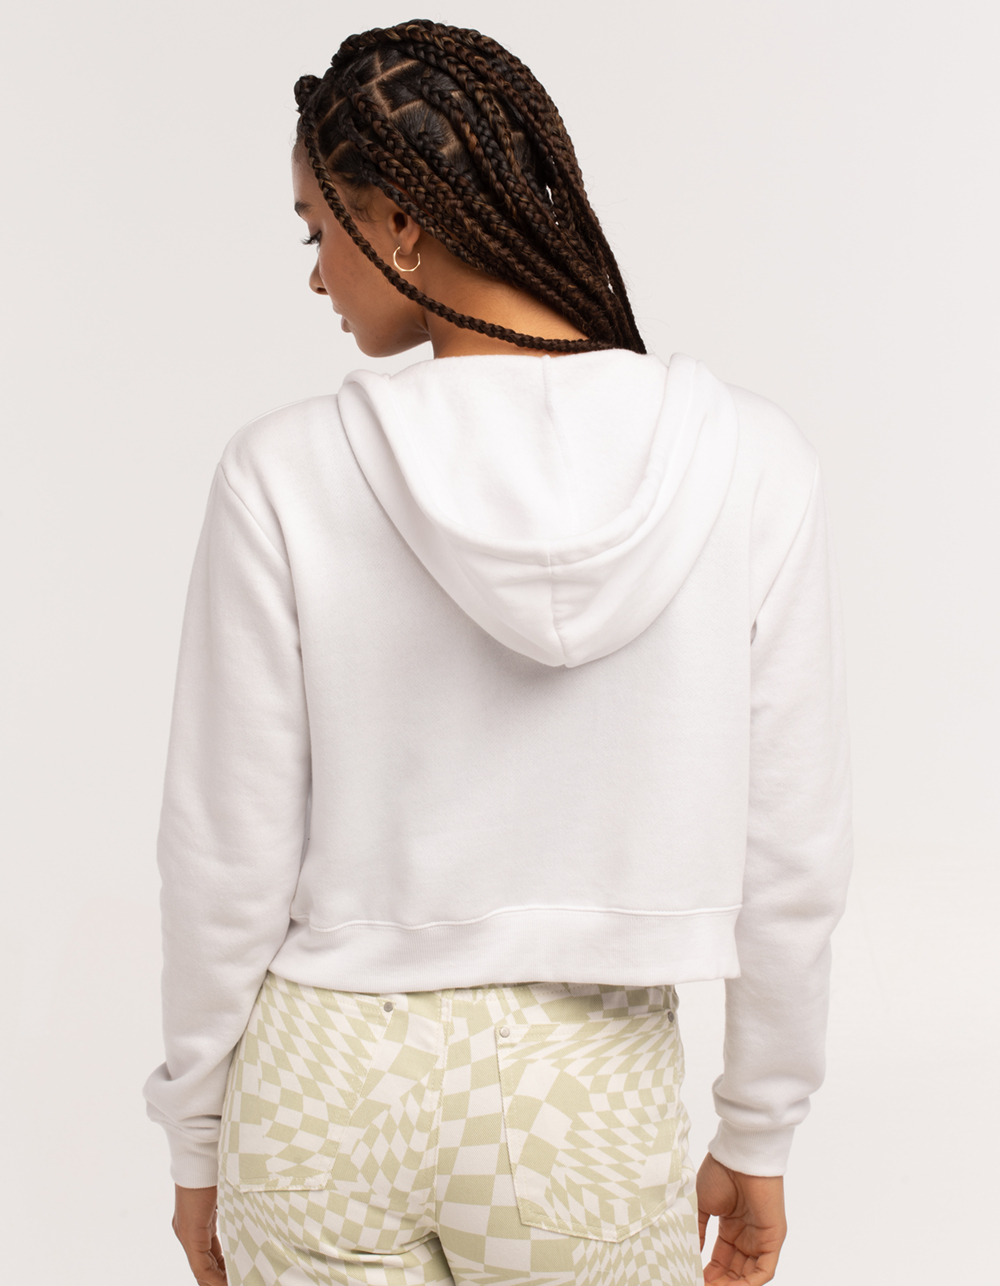 Cropped Zip Up Sweatshirt Women Womens Long Sleeve Tops White